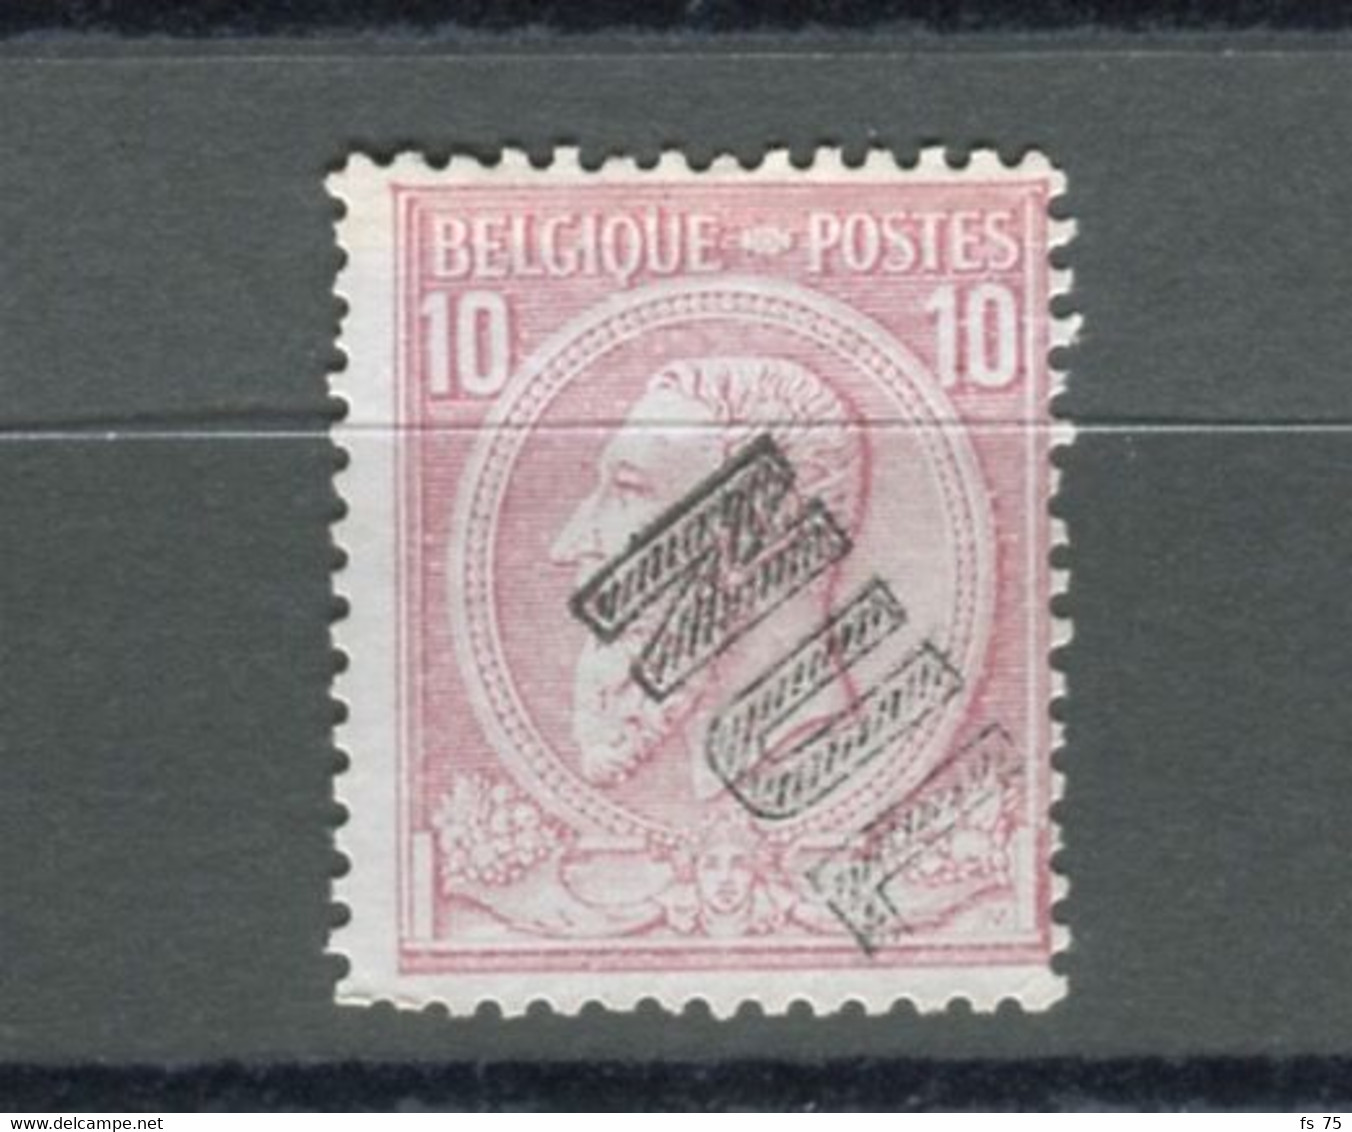 BELGIQUE - COB N°46 10C ROSE OBLITERE GRIFFE NUL - 1884-1891 Leopold II